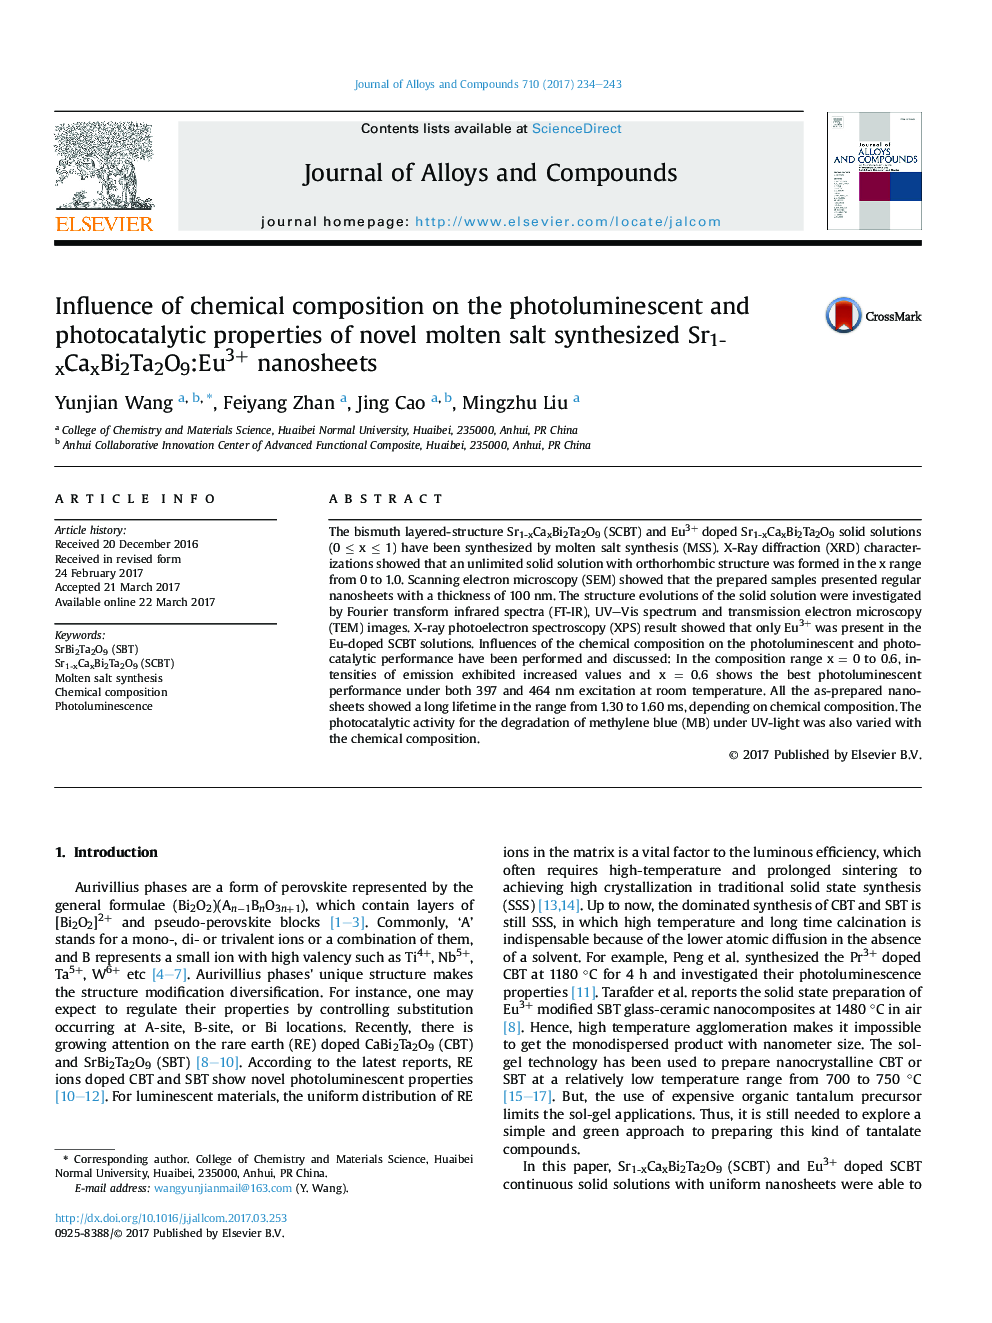 Influence of chemical composition on the photoluminescent and photocatalytic properties of novel molten salt synthesized Sr1-xCaxBi2Ta2O9:Eu3+ nanosheets